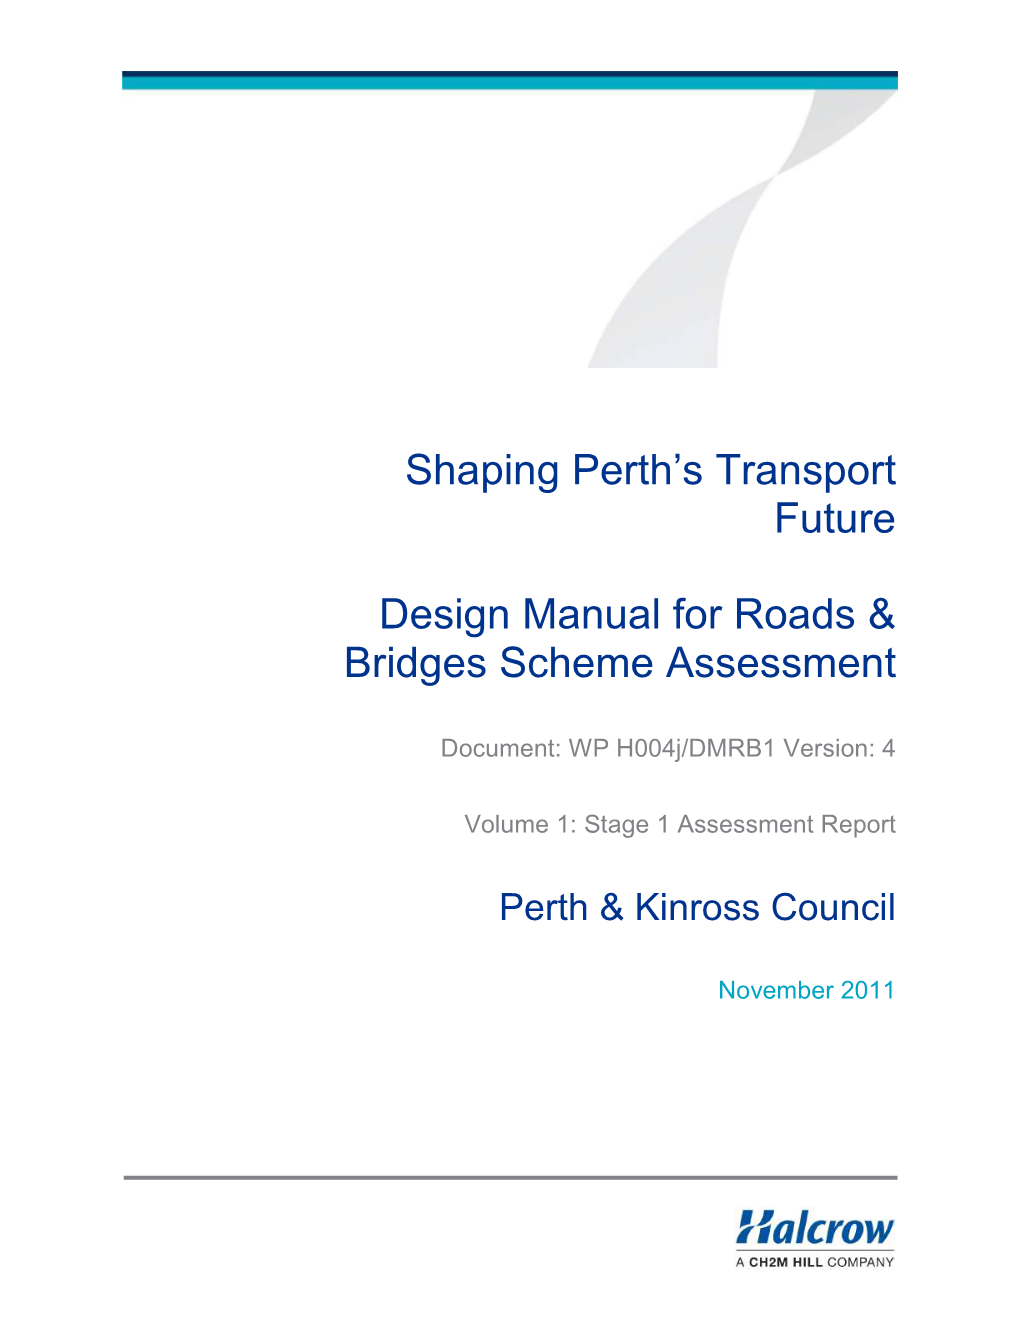 Shaping Perth's Transport Future Design Manual for Roads & Bridges